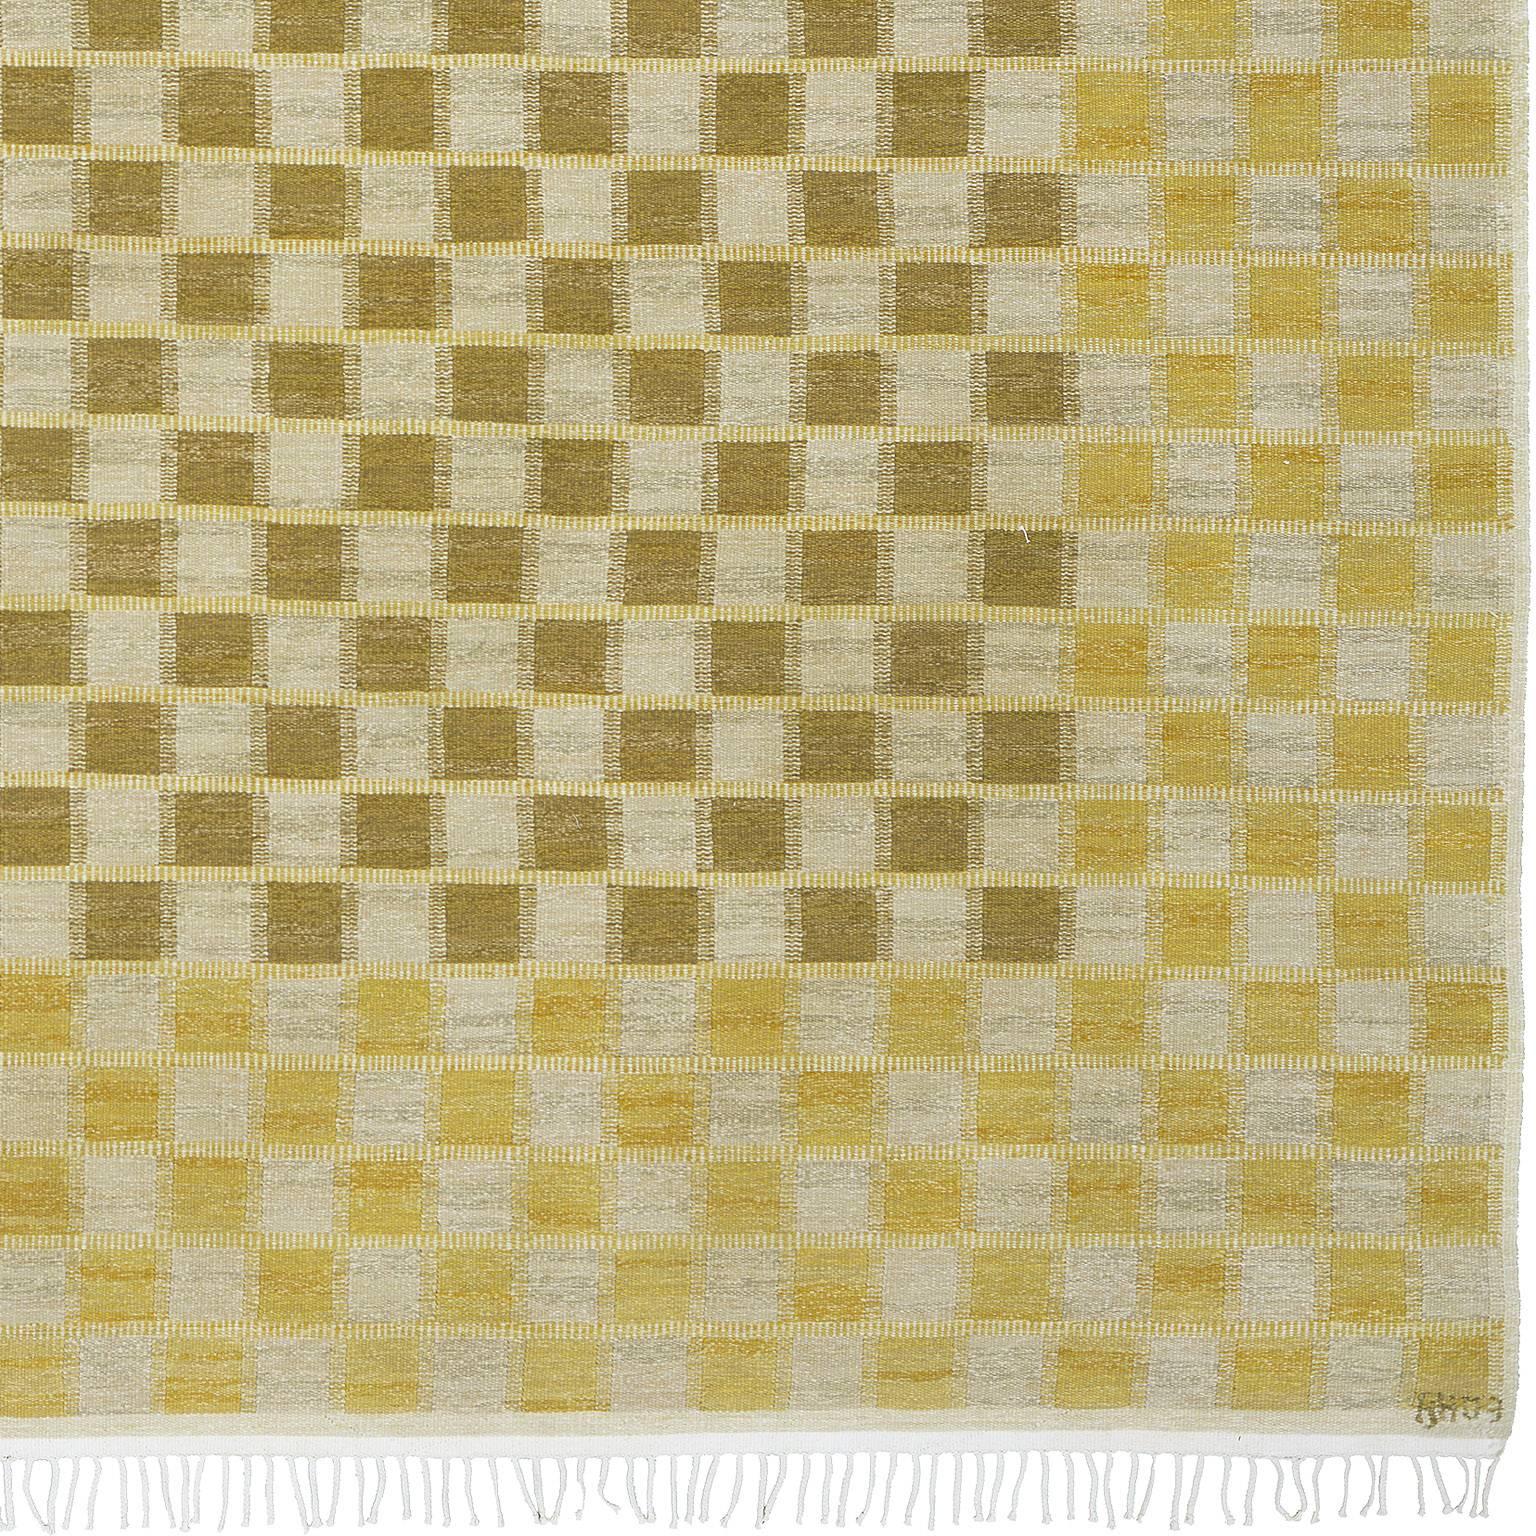 Contemporary 'Gingham' Carpet
Swedish flat-weave technique.
